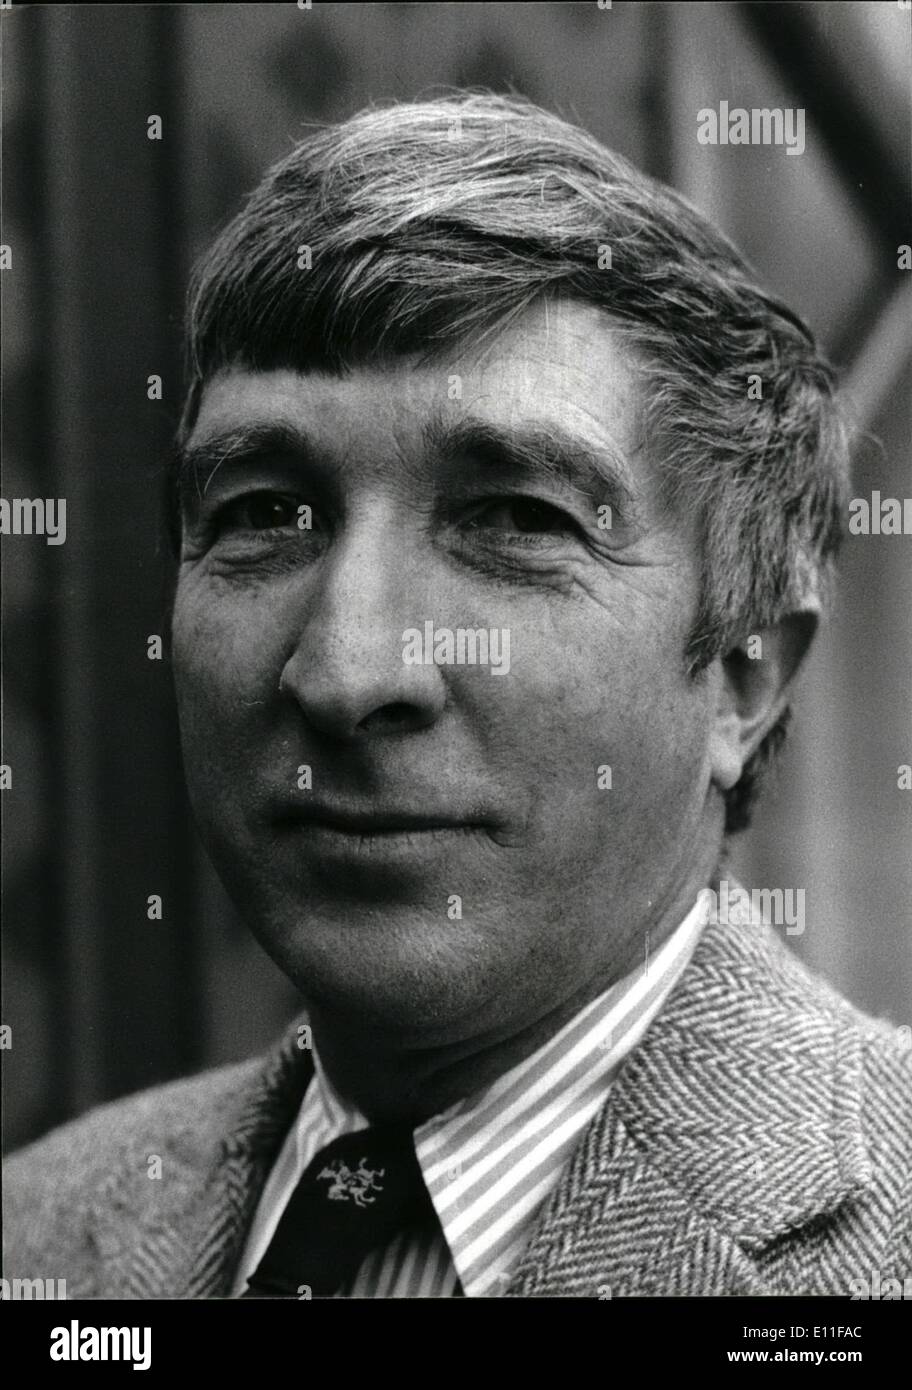 Ottobre 10, 1977 - John Updike, autore americano. Foto Stock